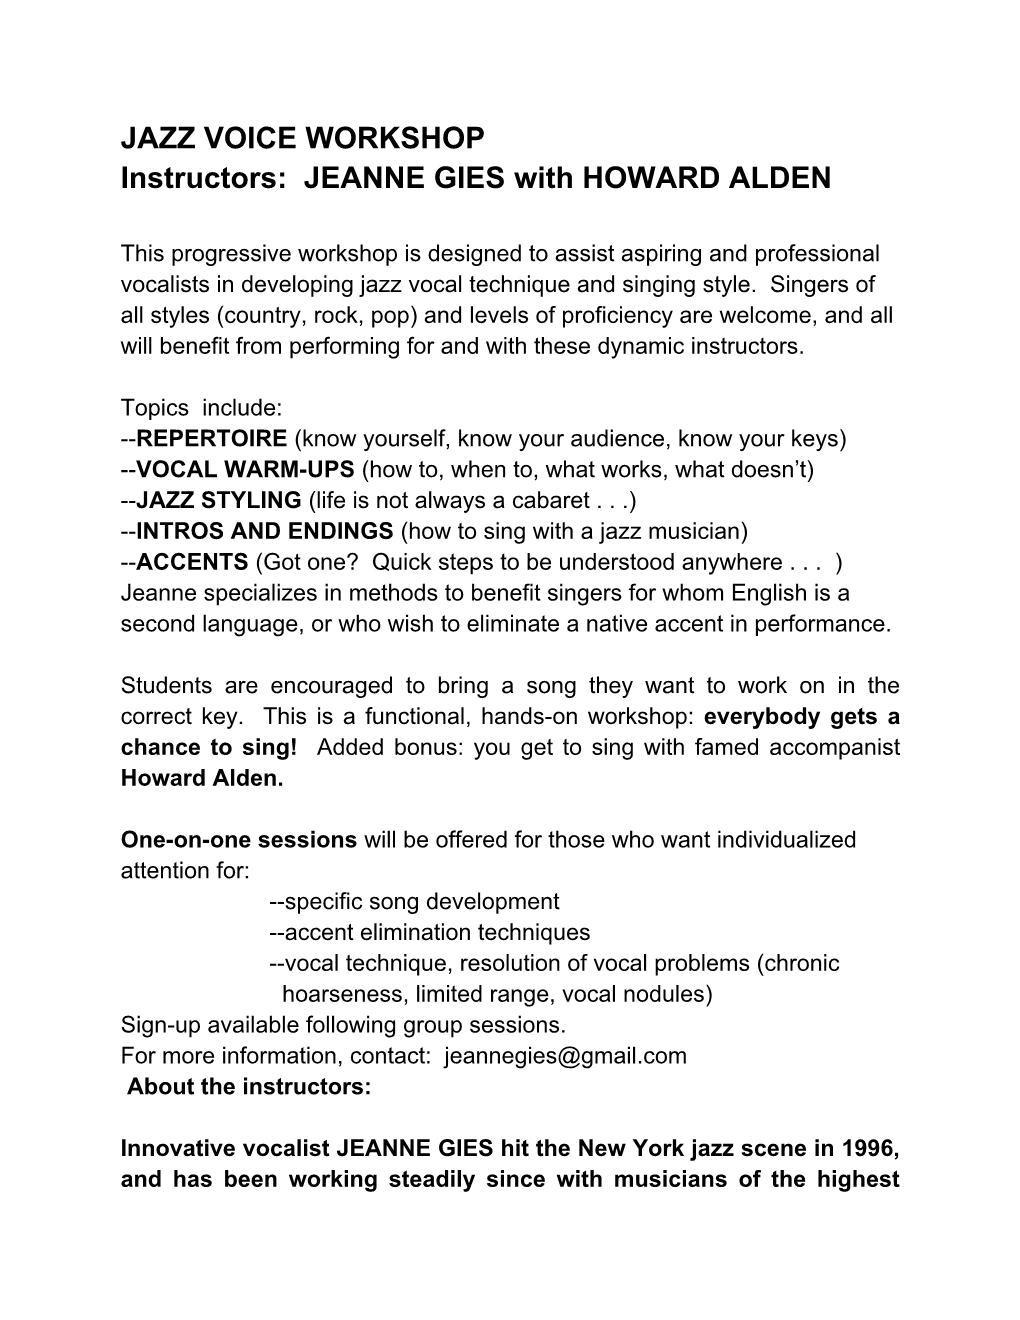 JAZZ VOICE WORKSHOP Instructors: JEANNE GIES with HOWARD ALDEN